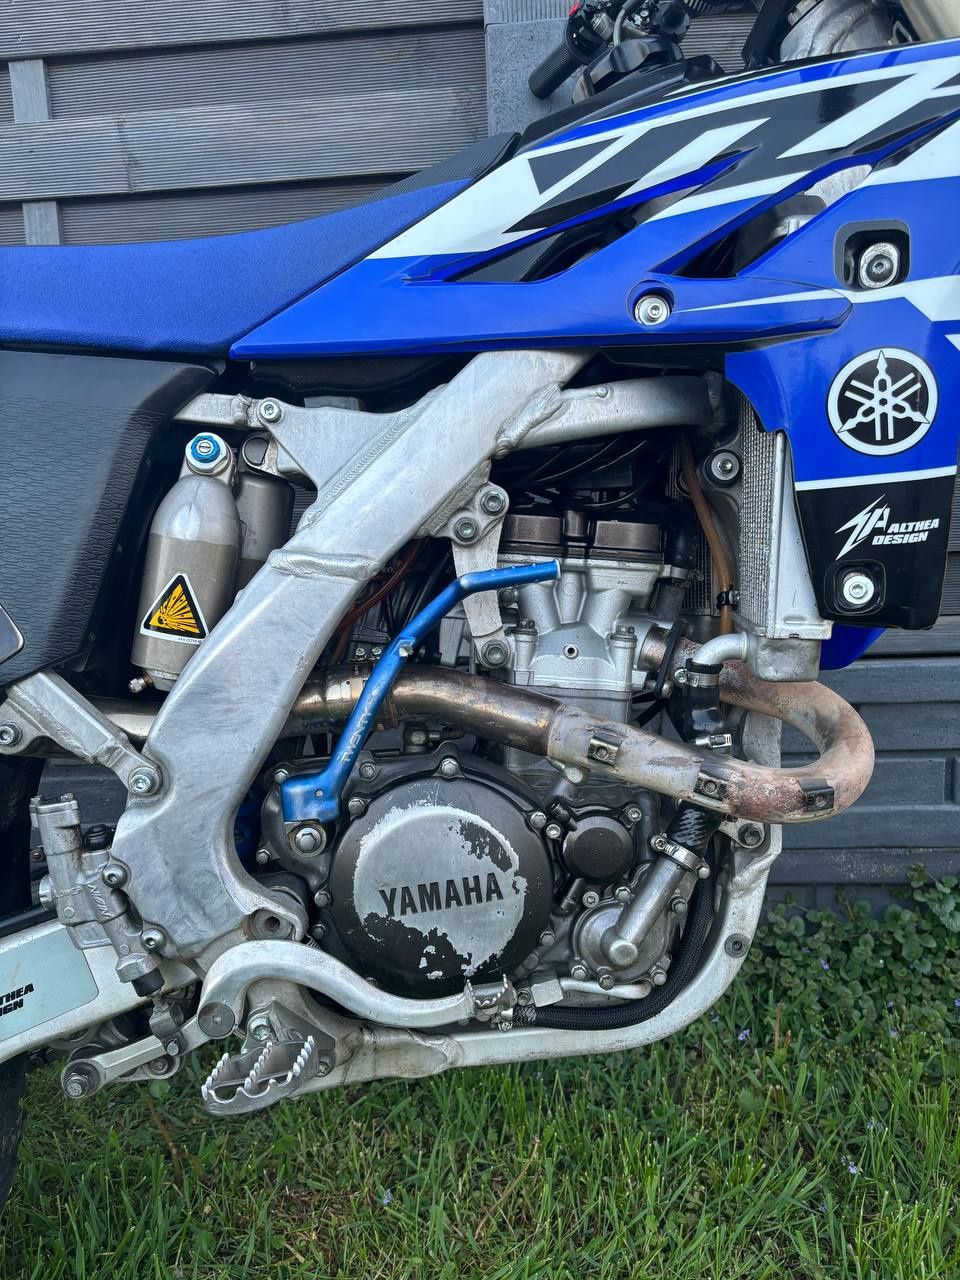 Yamaha yzf 250 13r